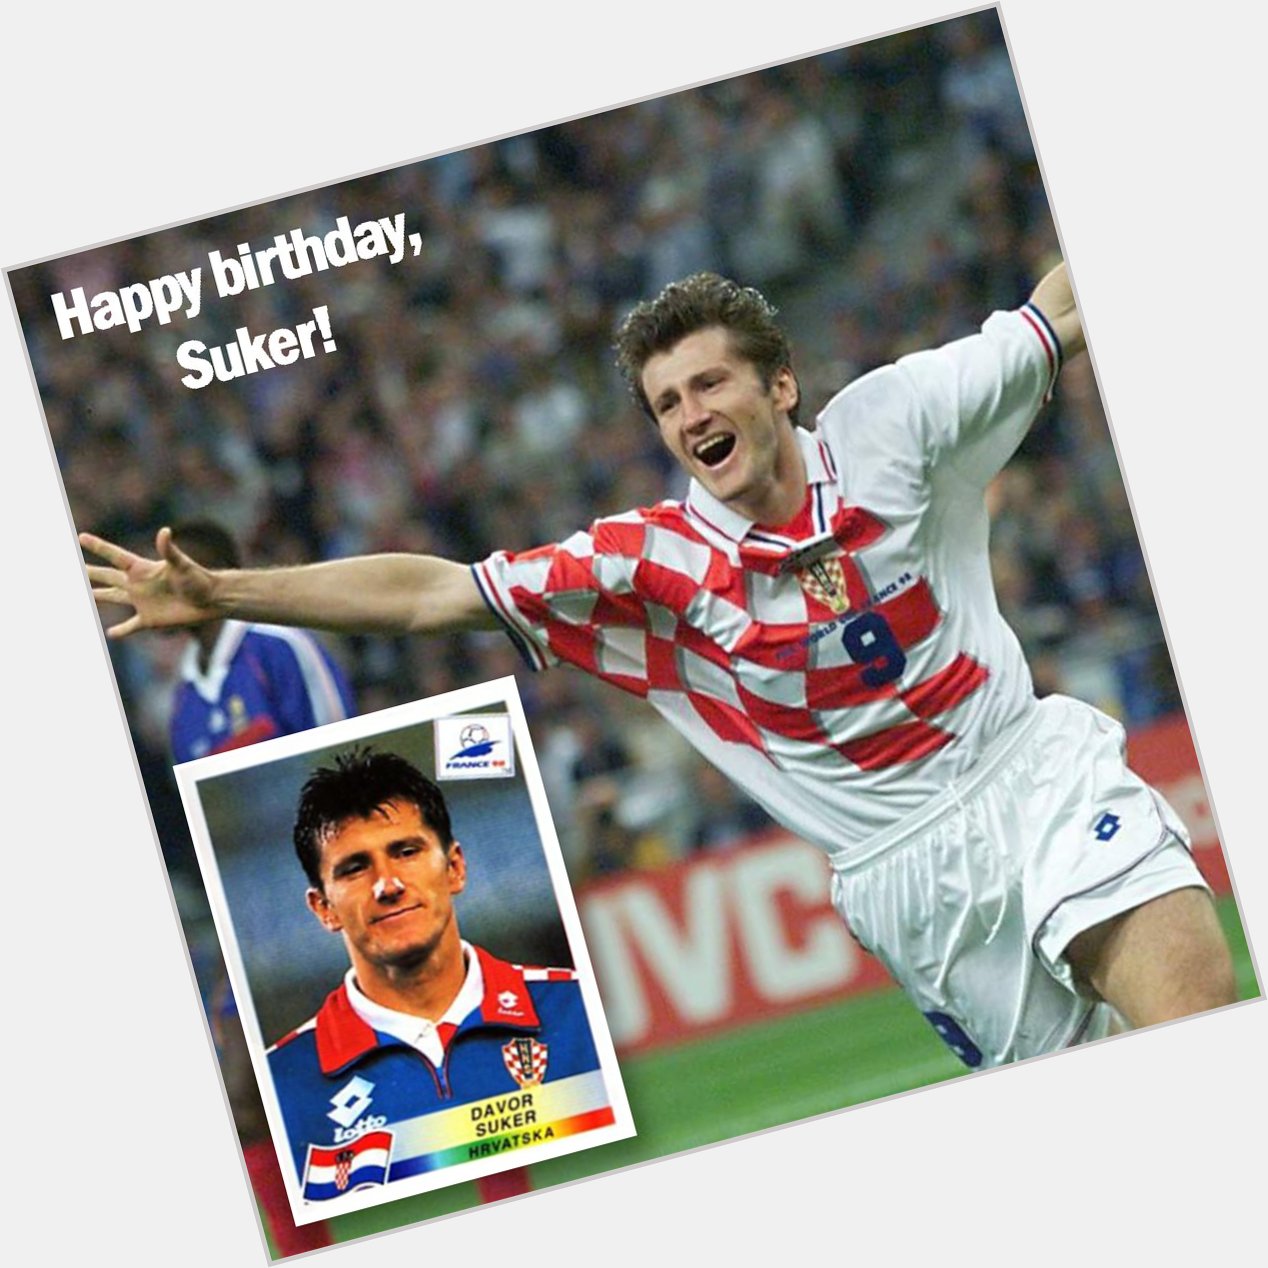 Happy birthday, Davor Suker! Incredible player from Croatia!!! 